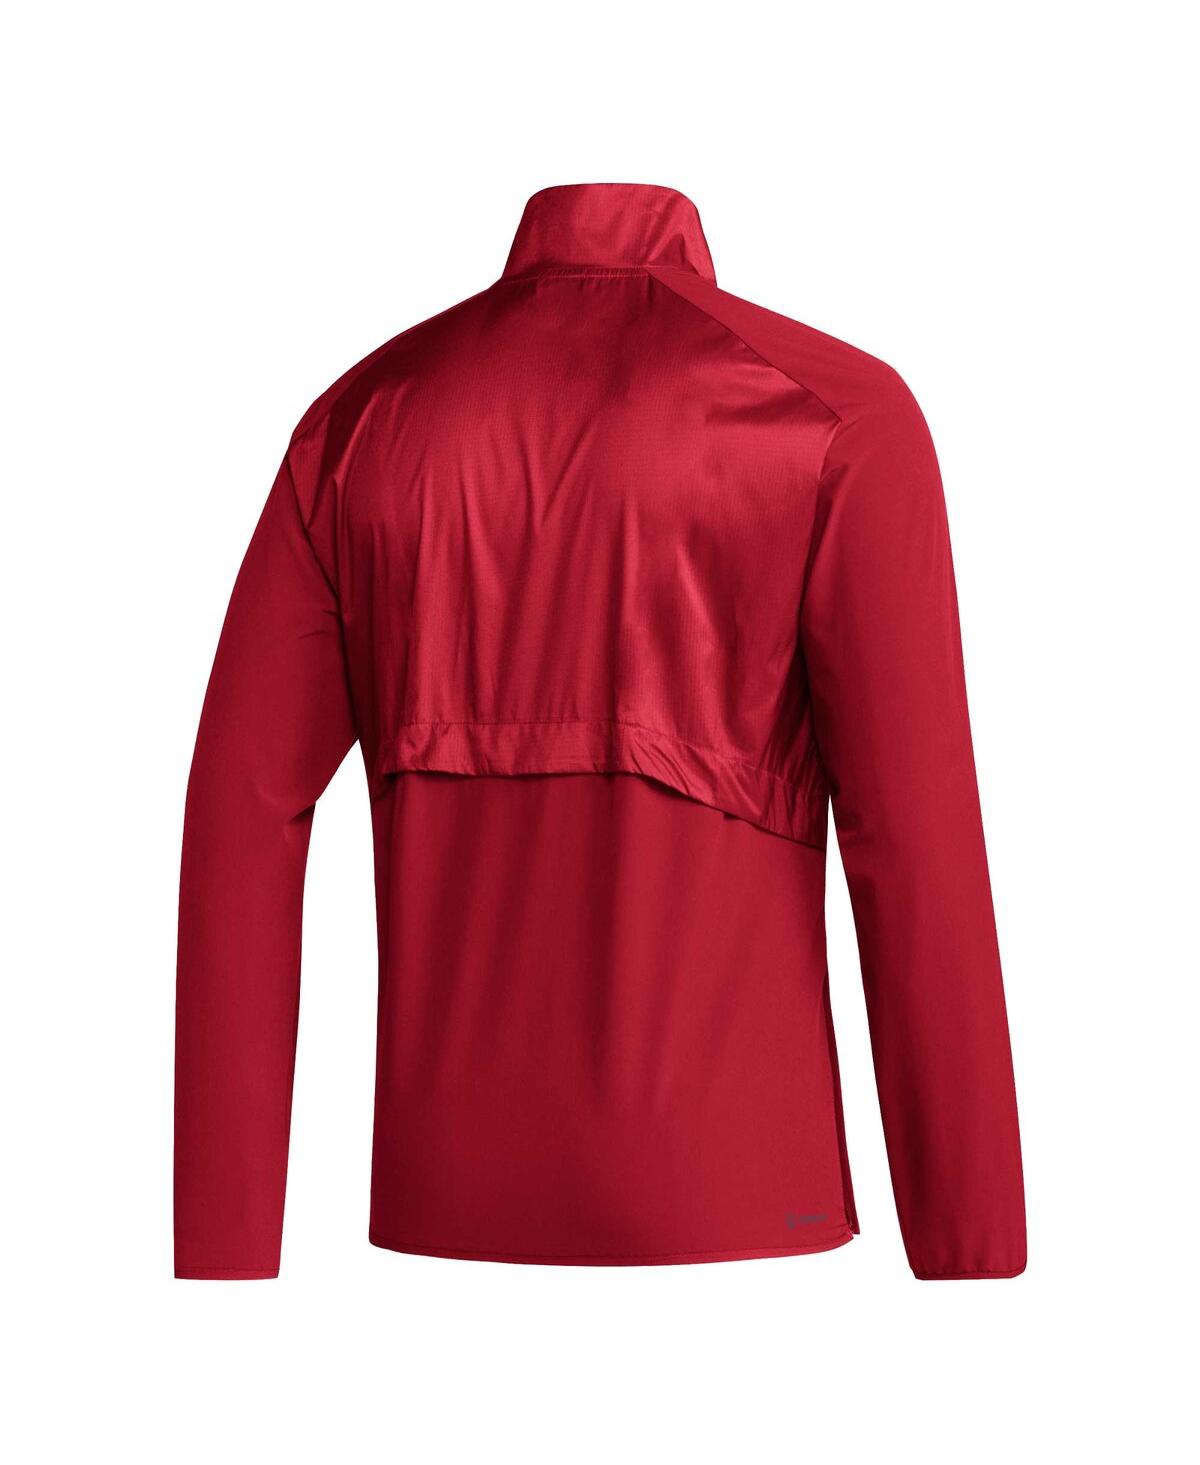 Shop Adidas Originals Men's Adidas Scarlet Rutgers Scarlet Knights Sideline Aeroready Raglan Sleeve Quarter-zip Jacket